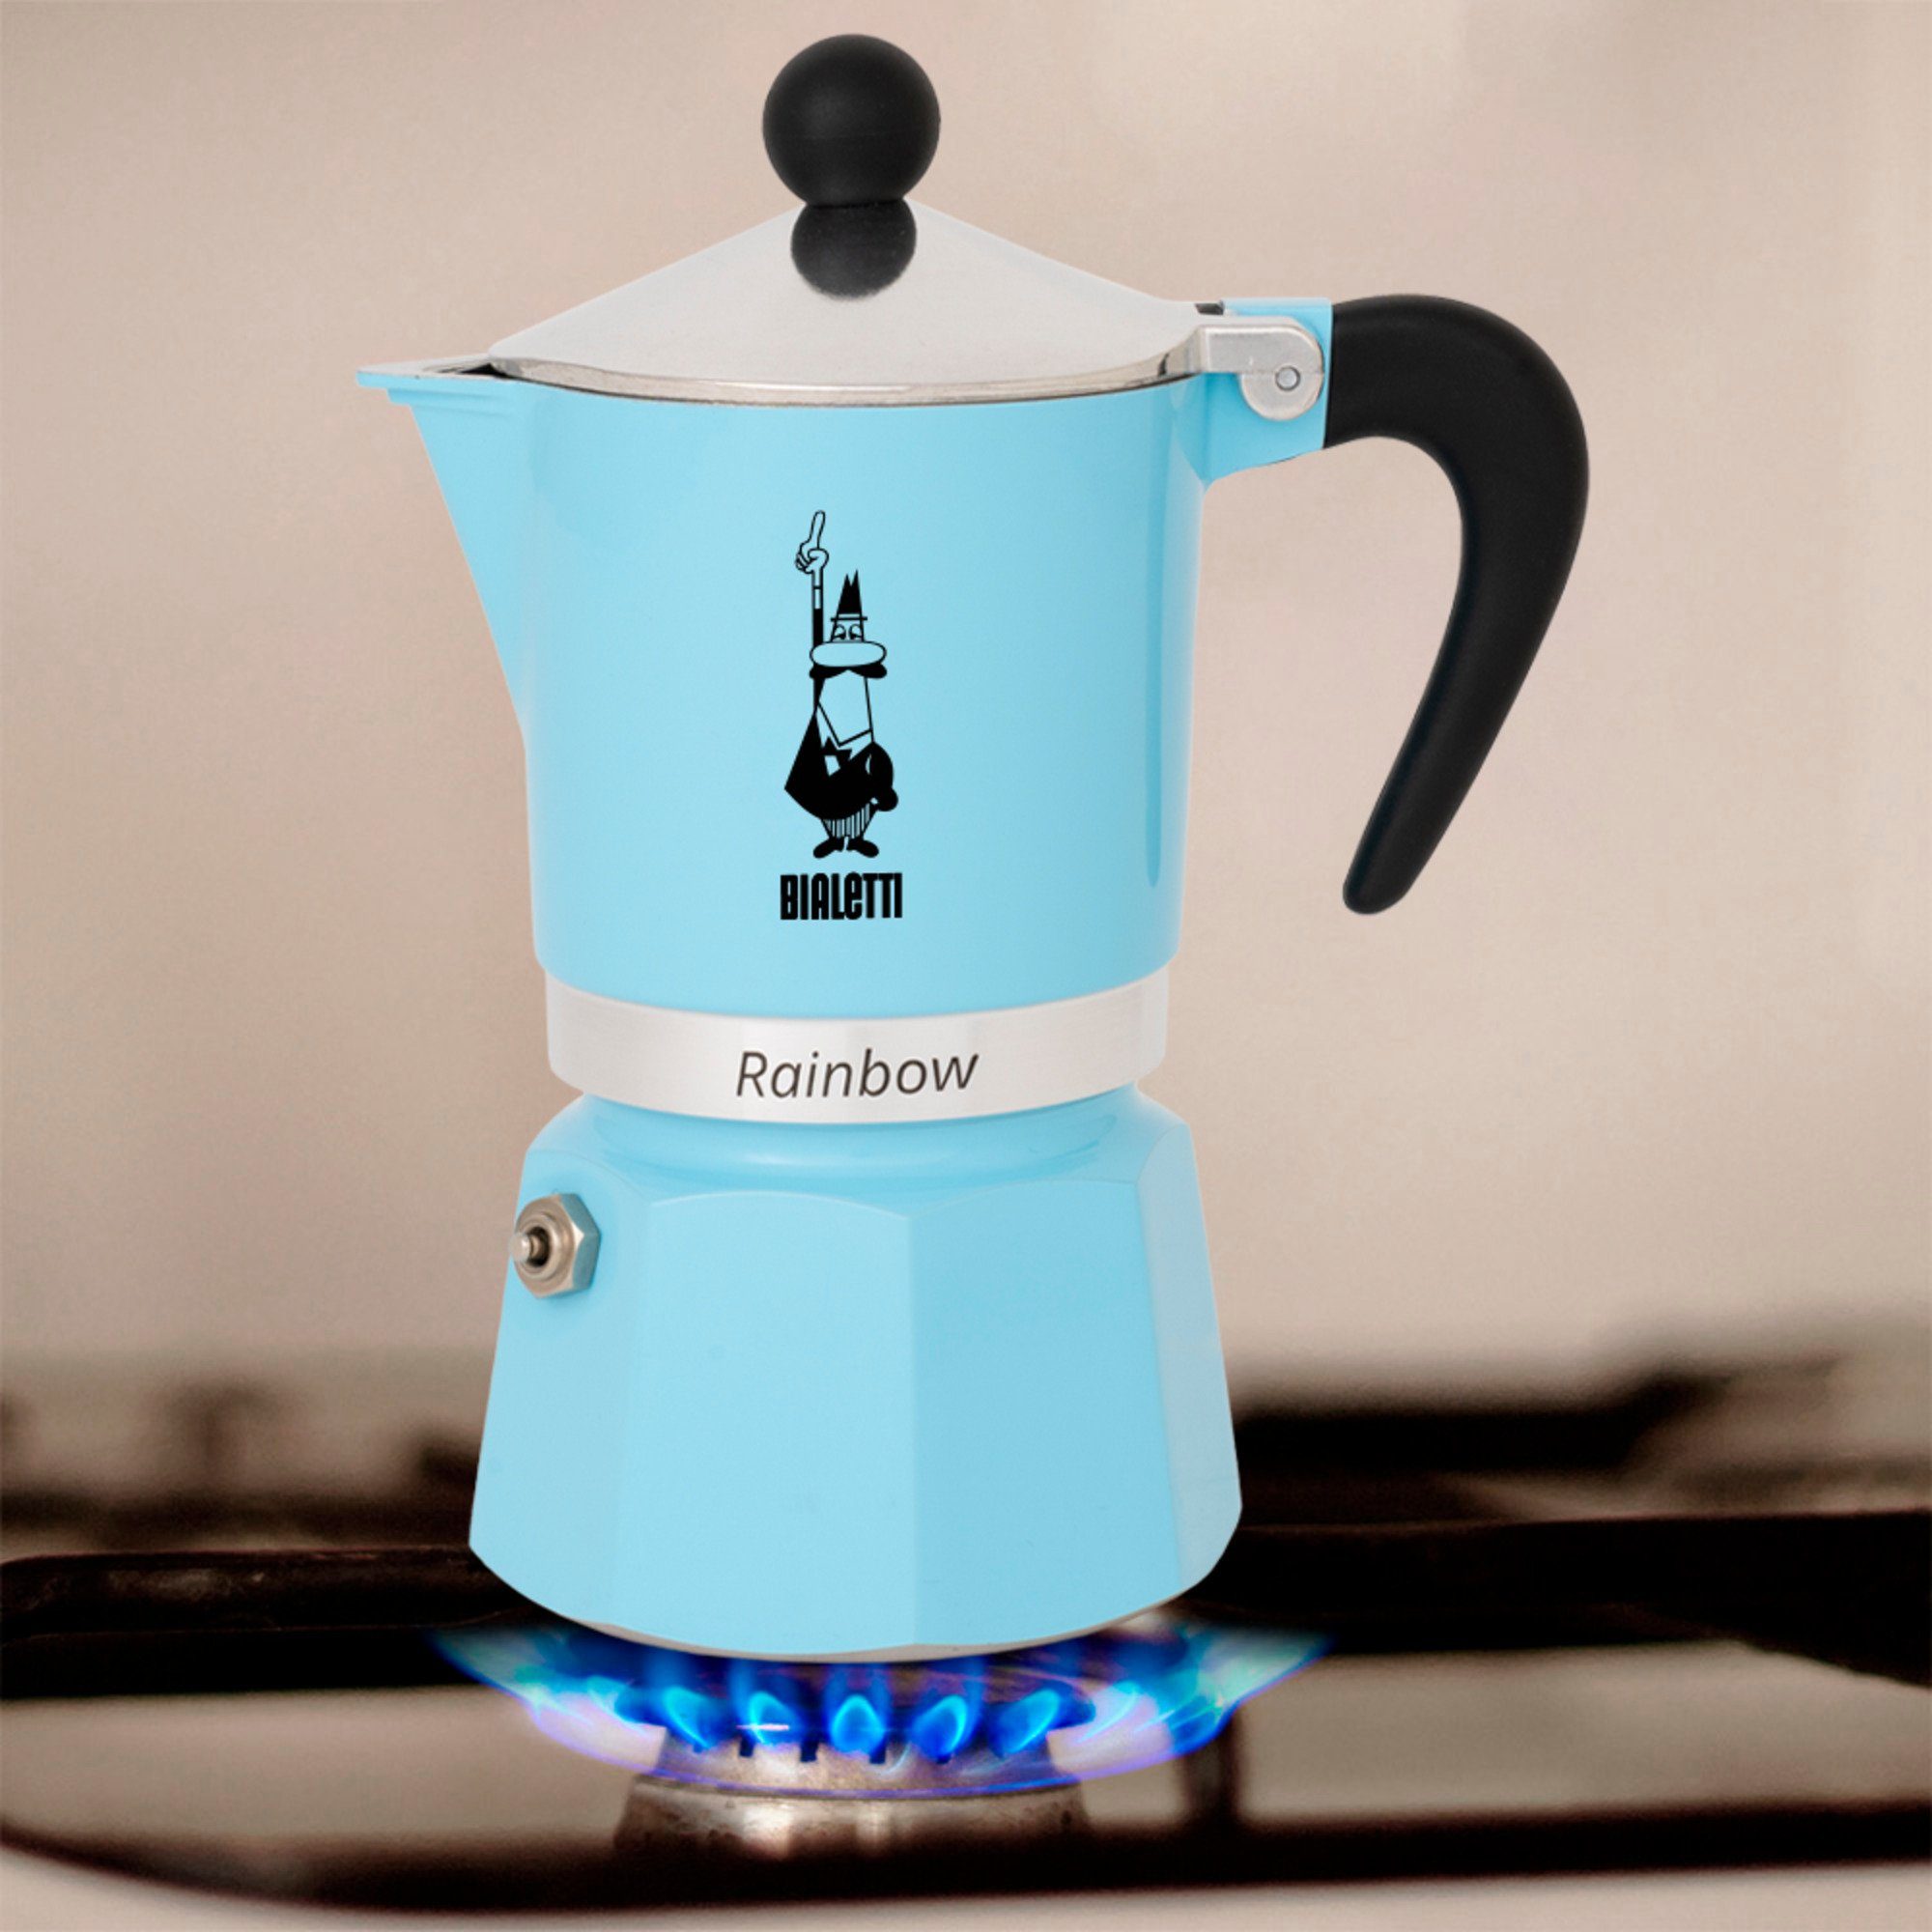 Tassen) (3 Espressomaschine, Kaffeebereiter Bialetti BIALETTI Rainbow,